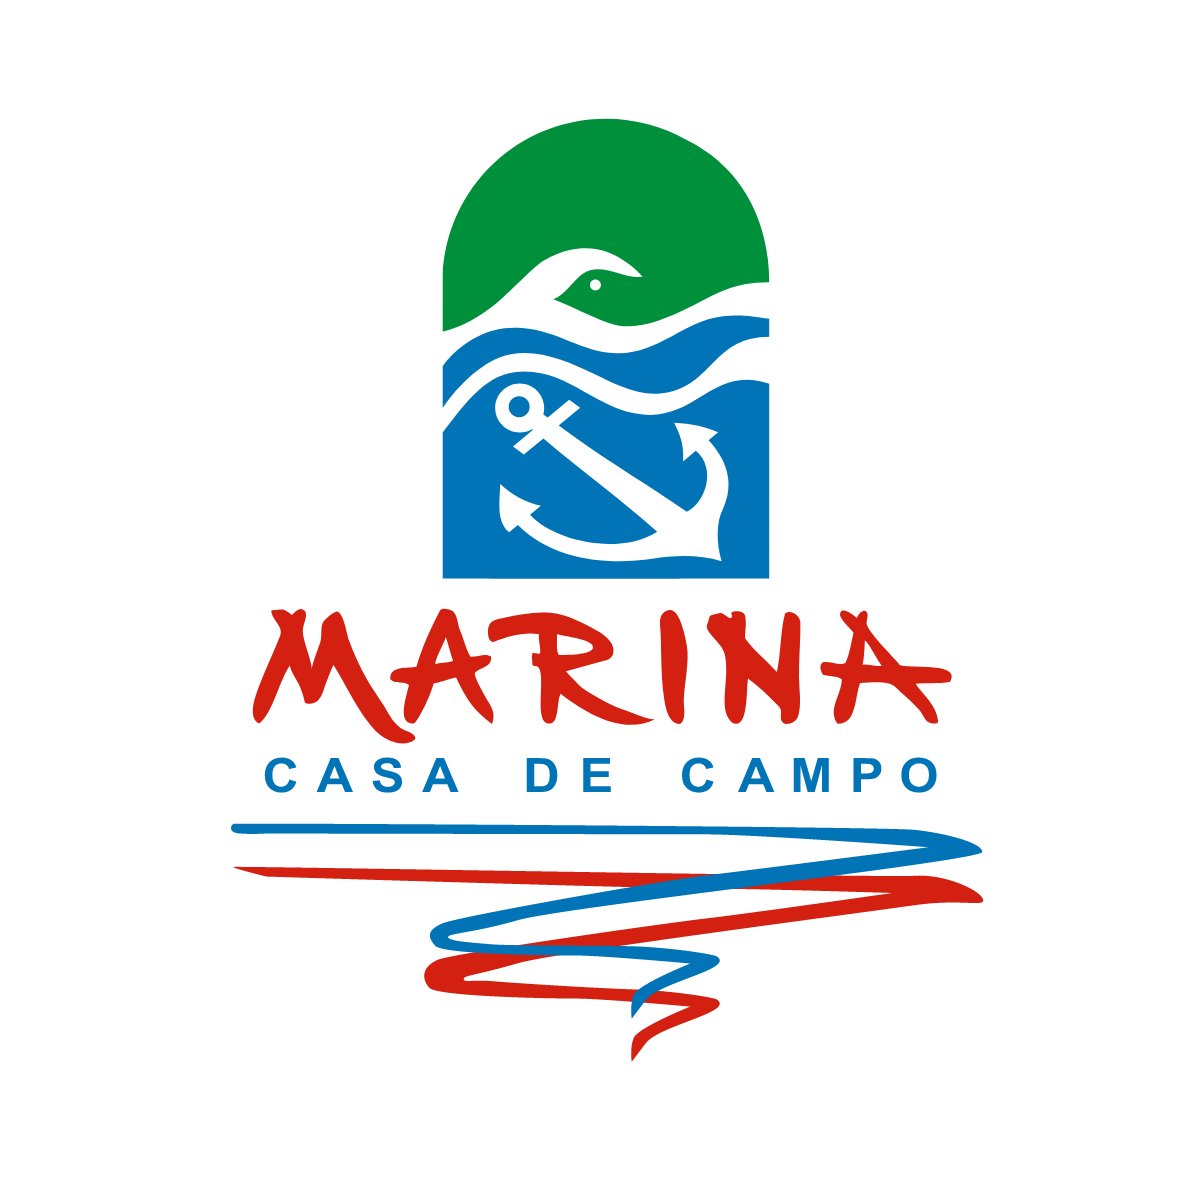 Marina Casa de Campo